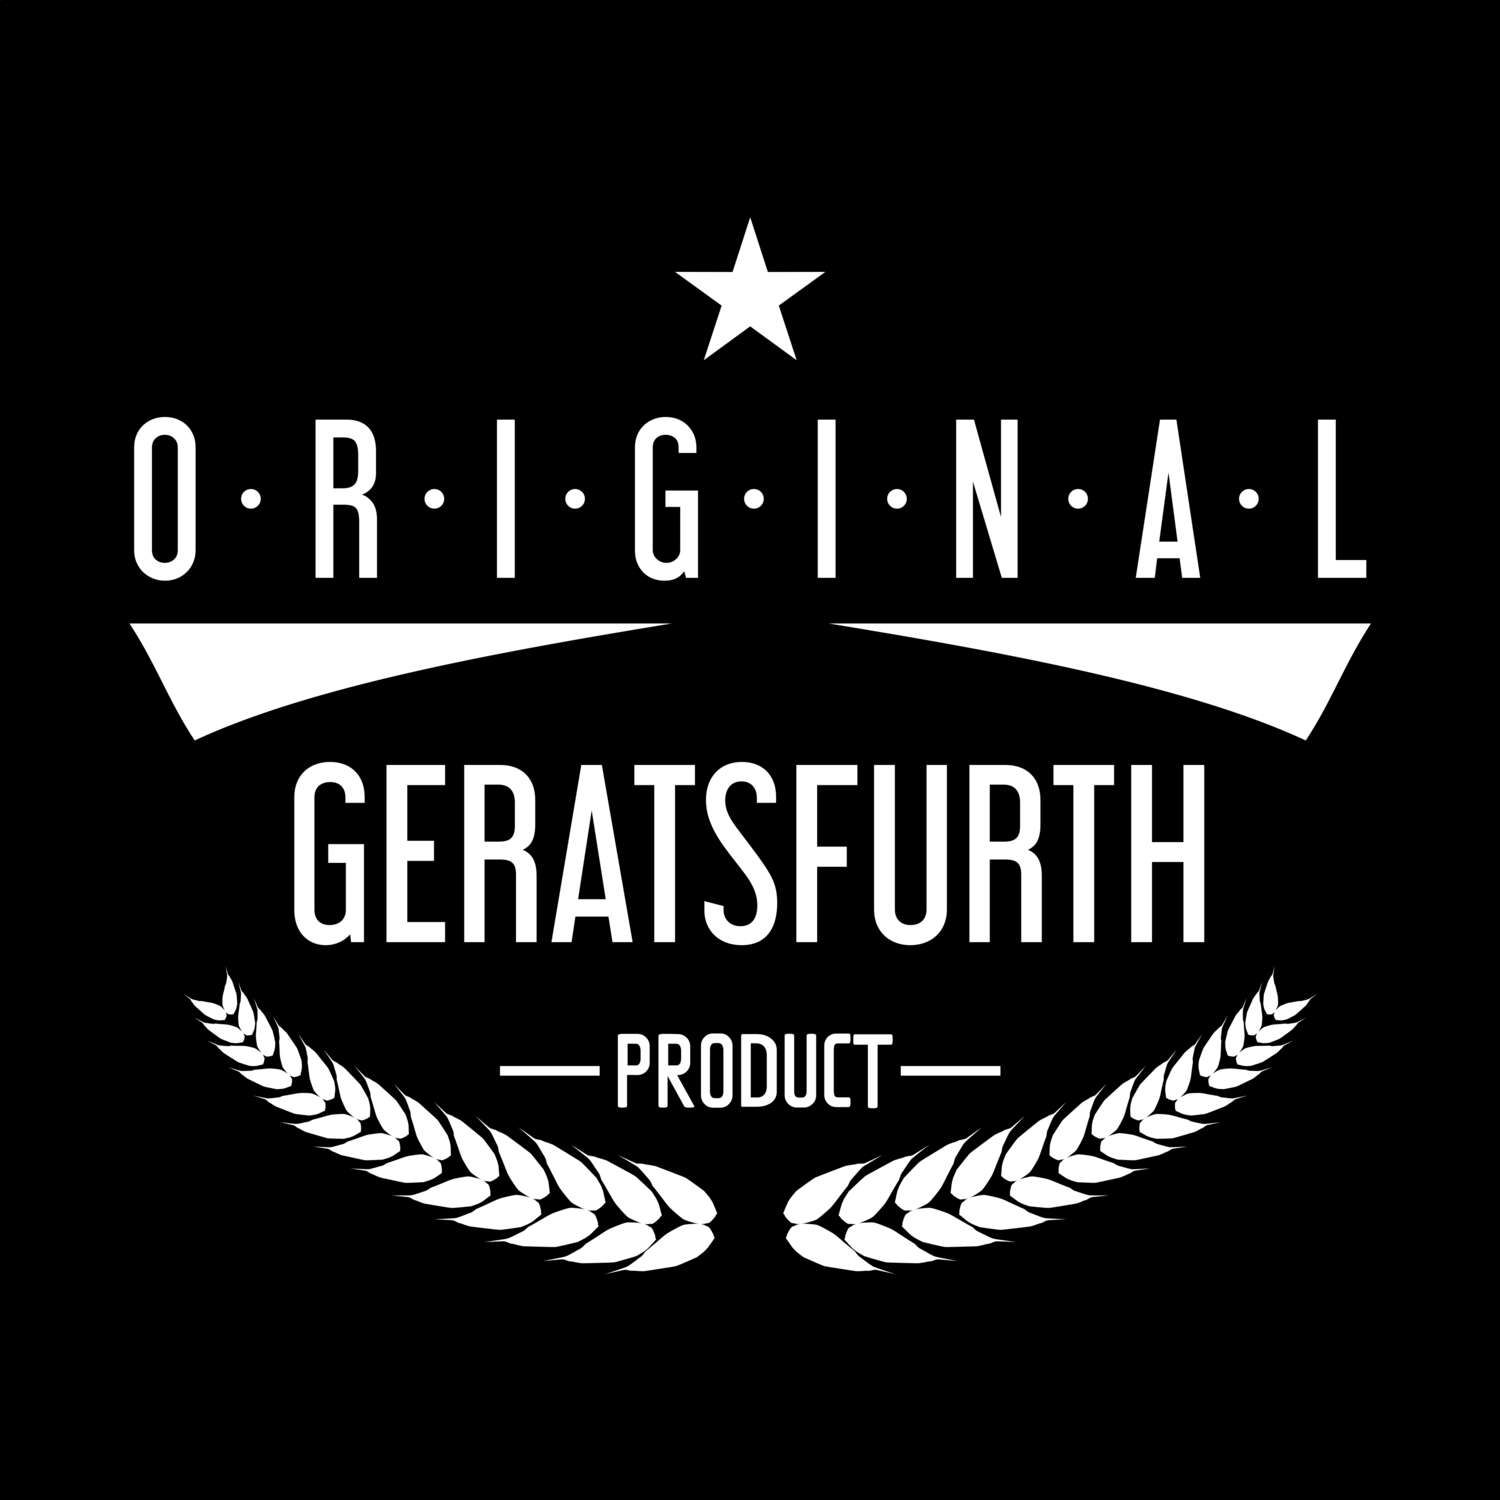 Geratsfurth T-Shirt »Original Product«